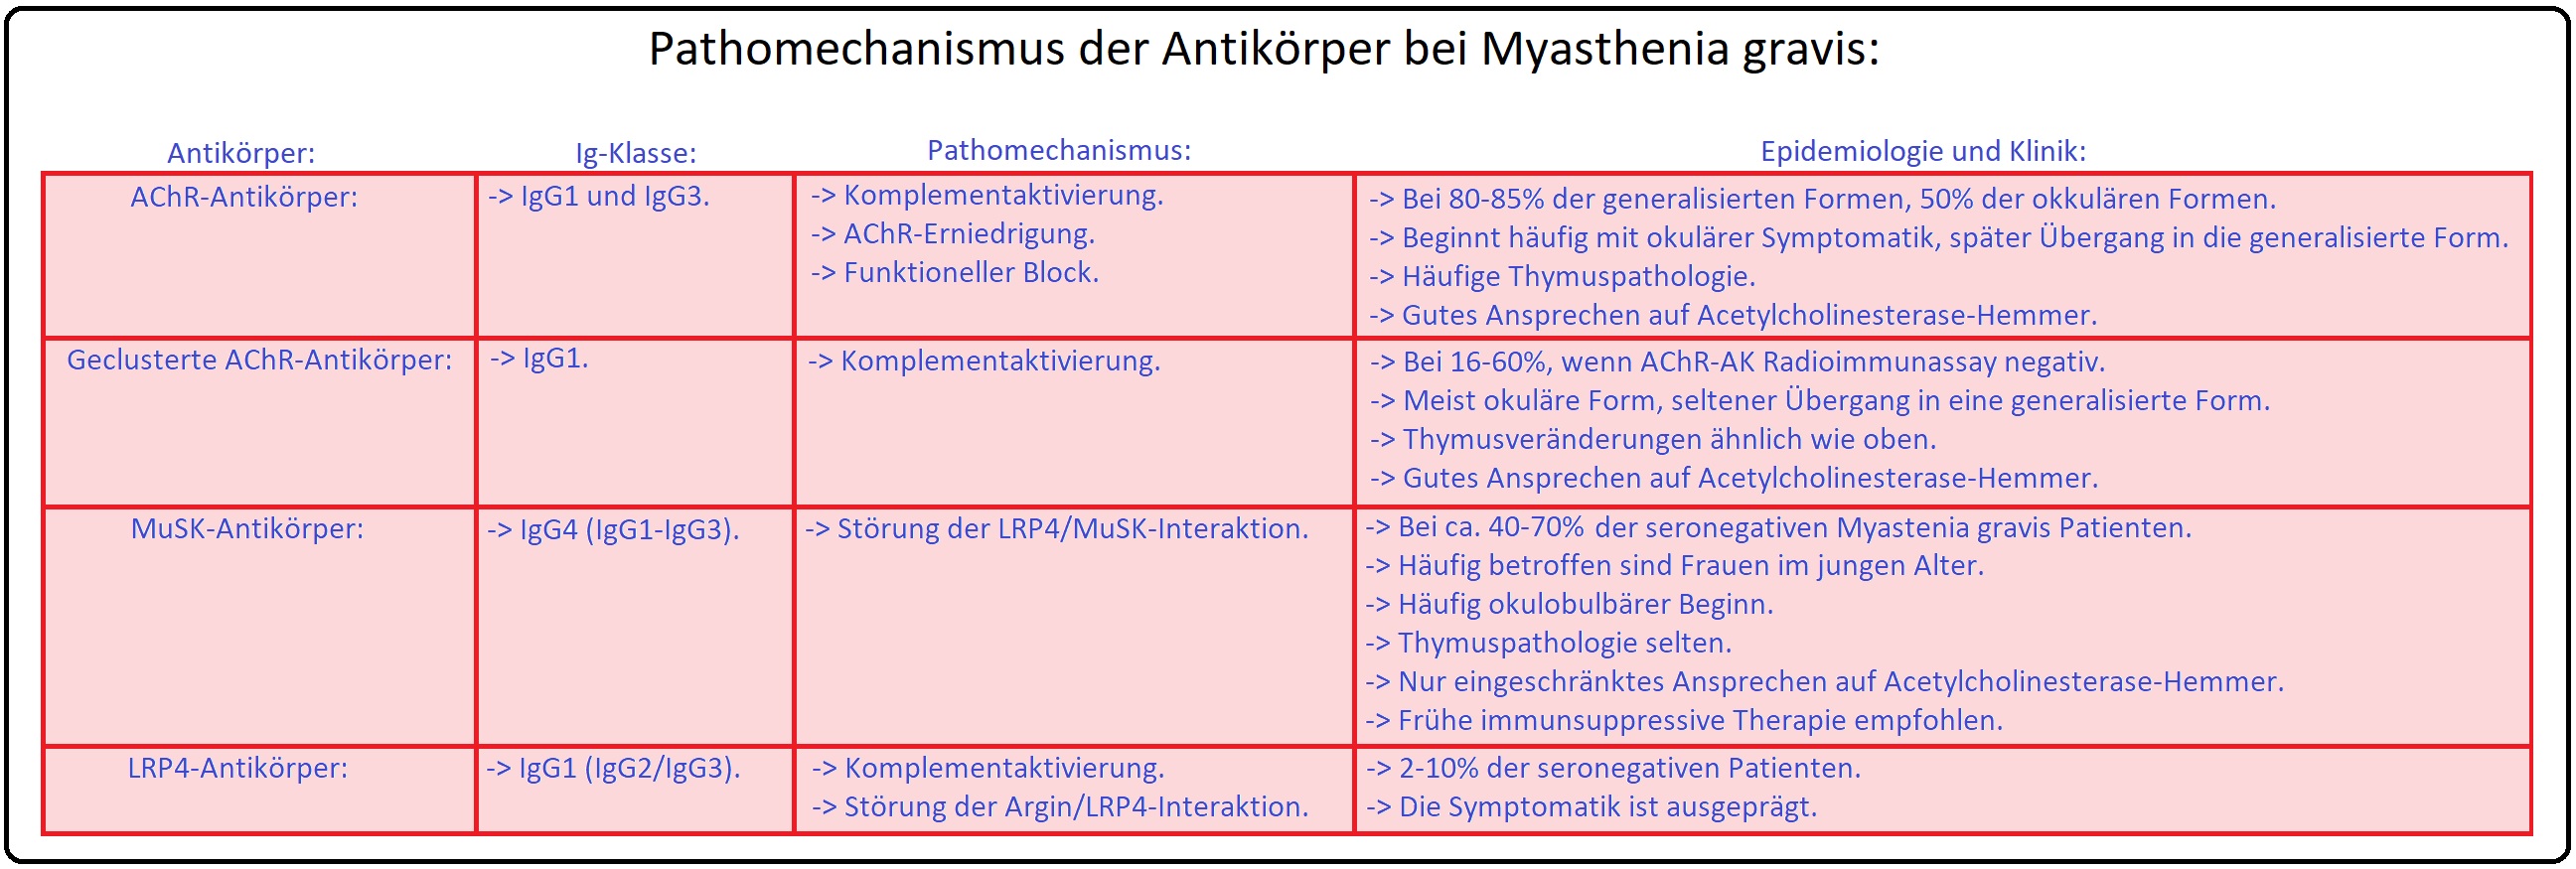 20 Pathomechanismus der Antikörper bei Myasthenia gravis